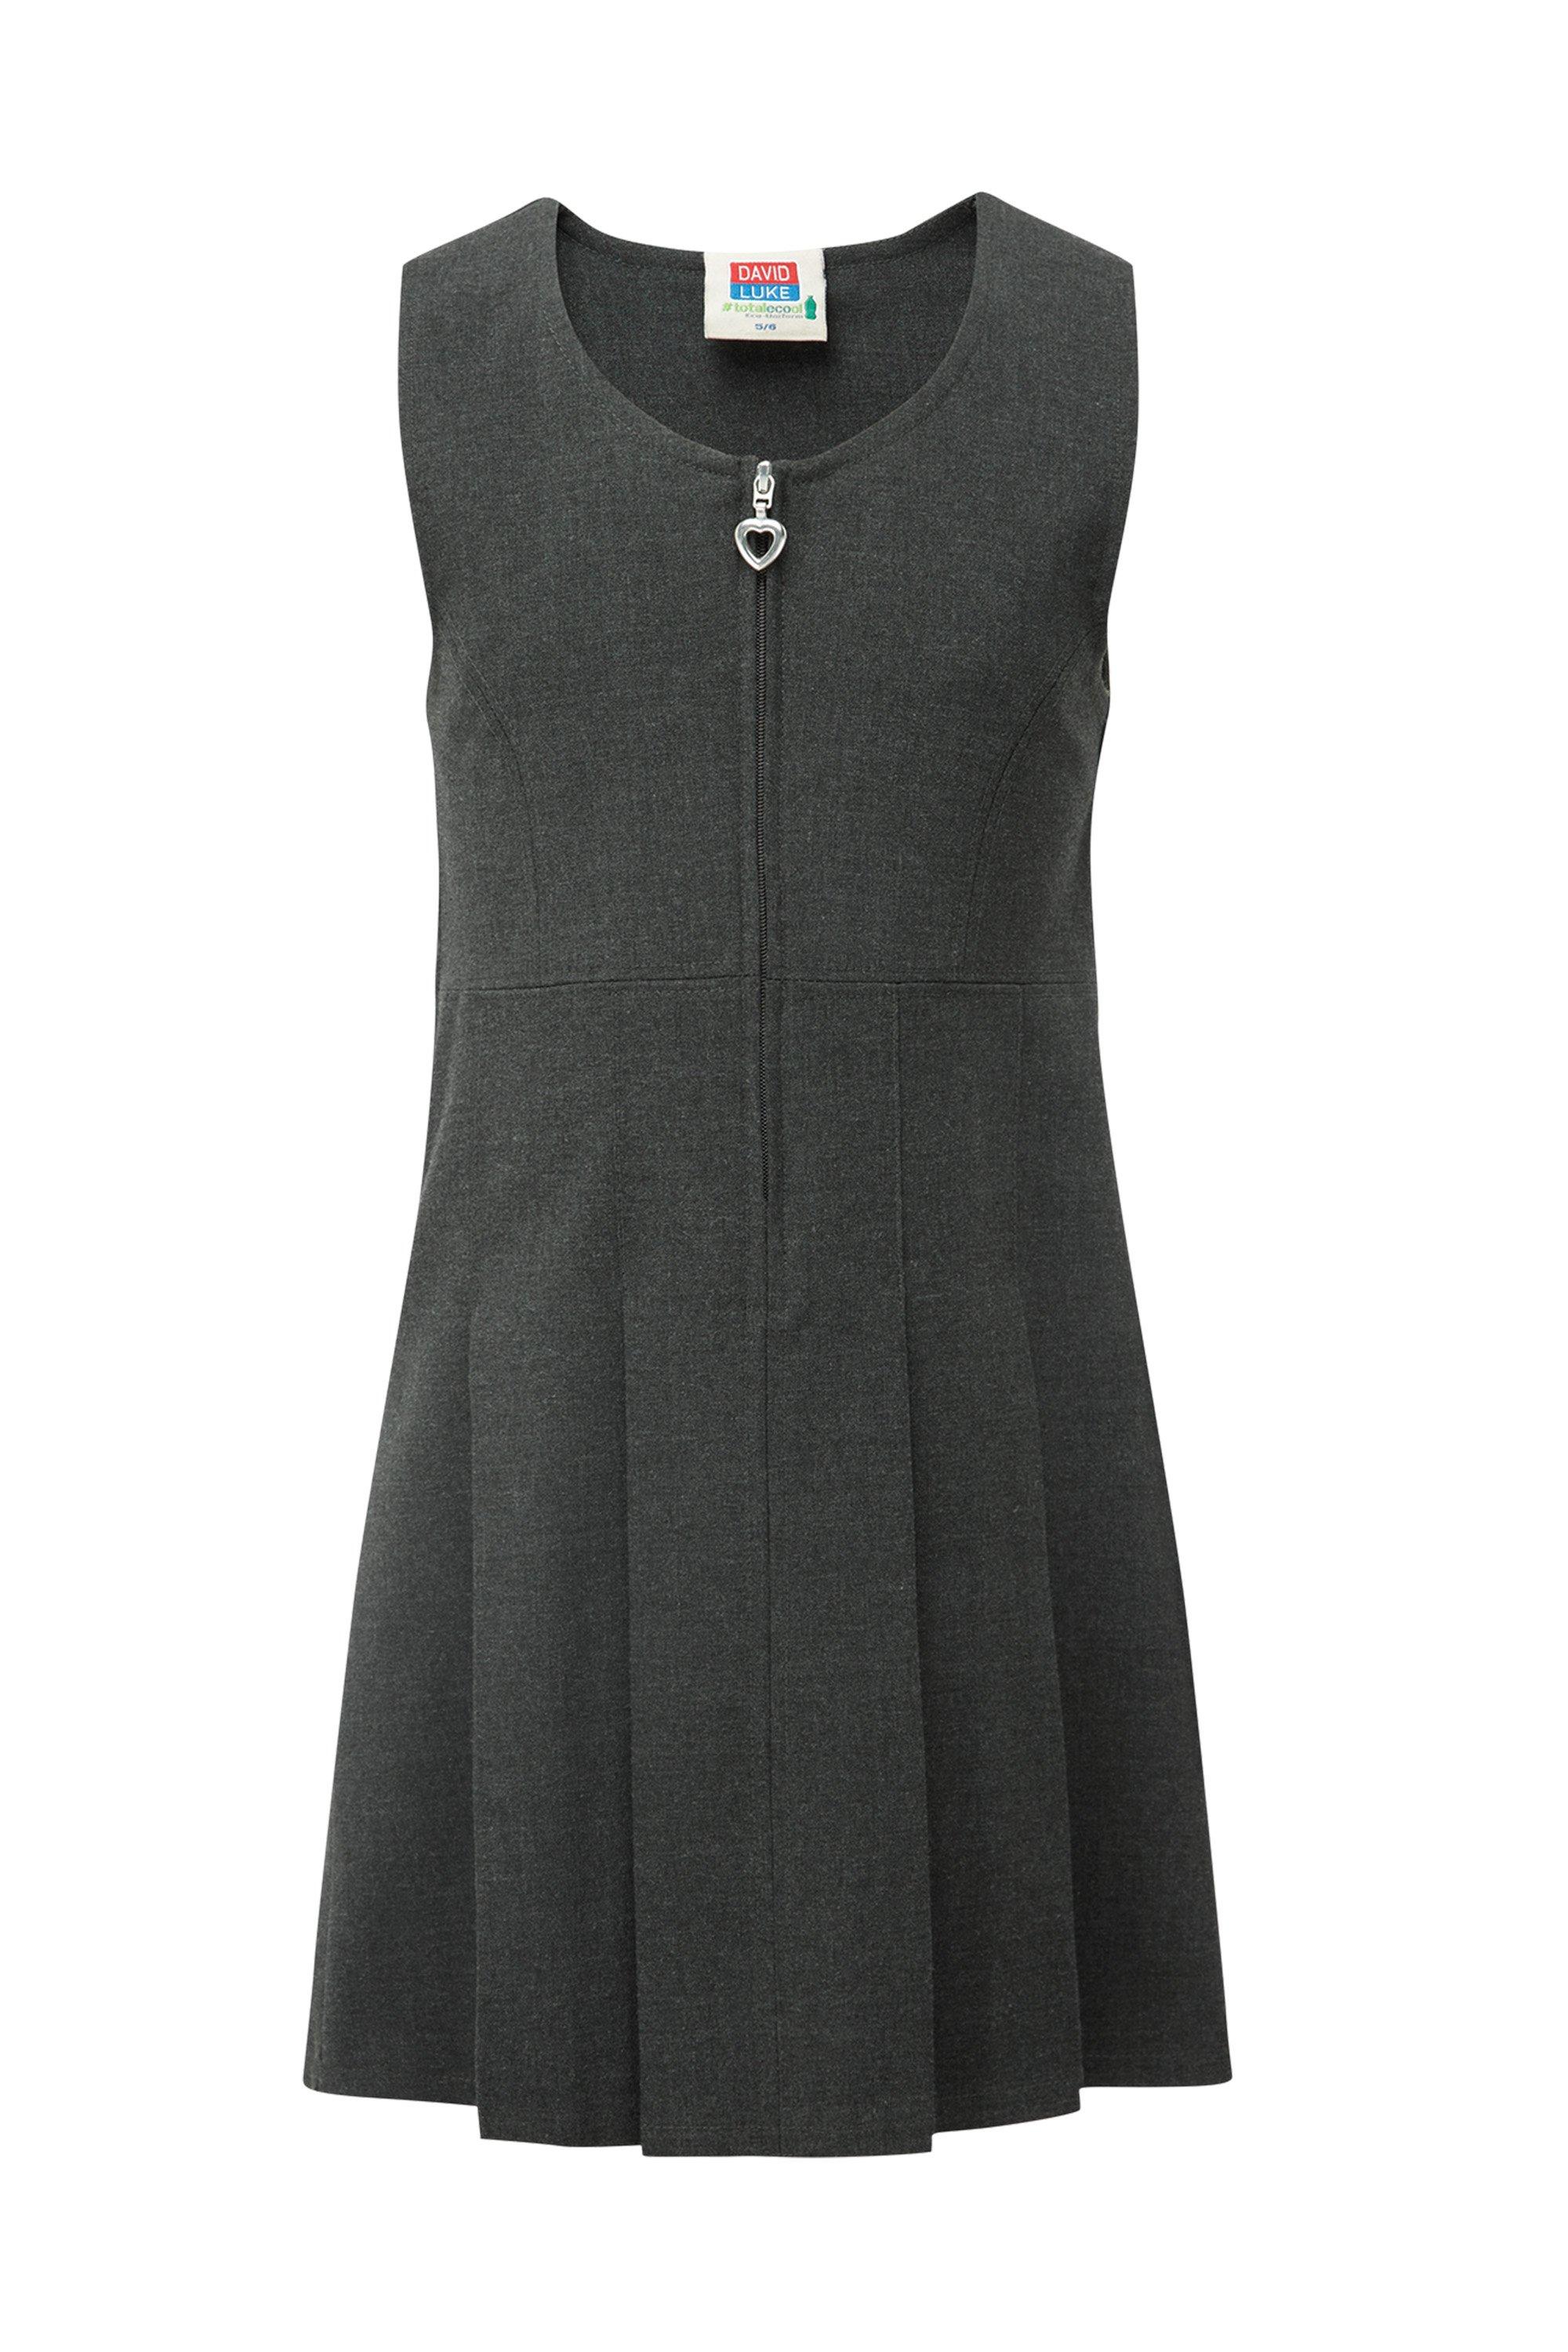 Школьное платье-сарафан David Luke, серый школьный сарафан moonstar комплект размер 5 лет бордовый серый